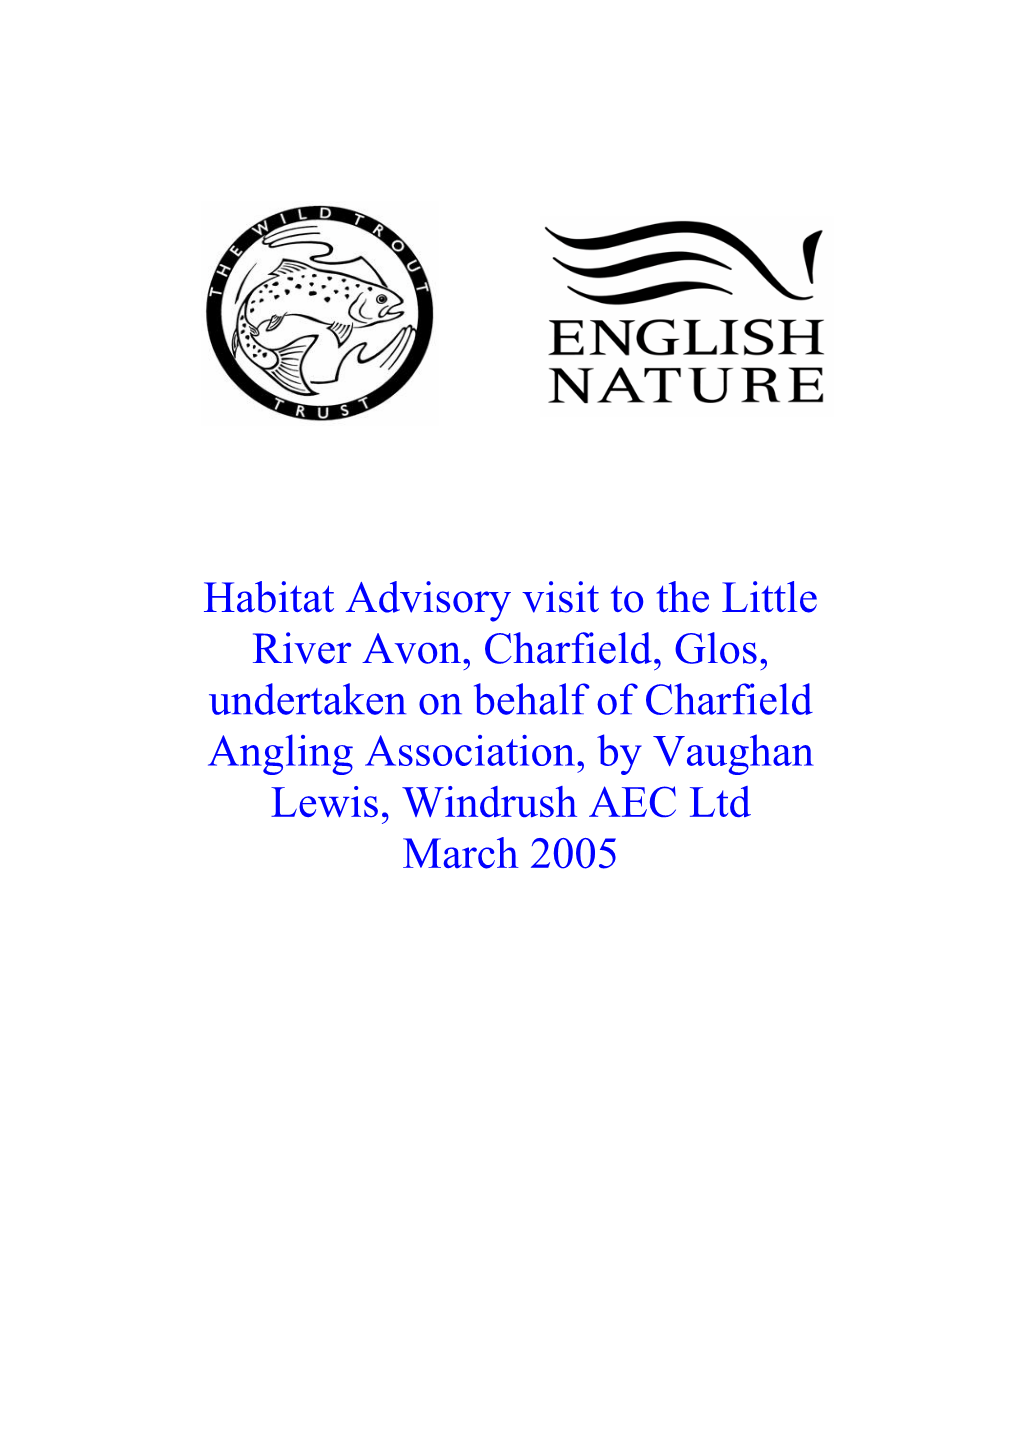 Habitat Advisory Visit to the Little River Avon, Charfield, Glos, Undertaken